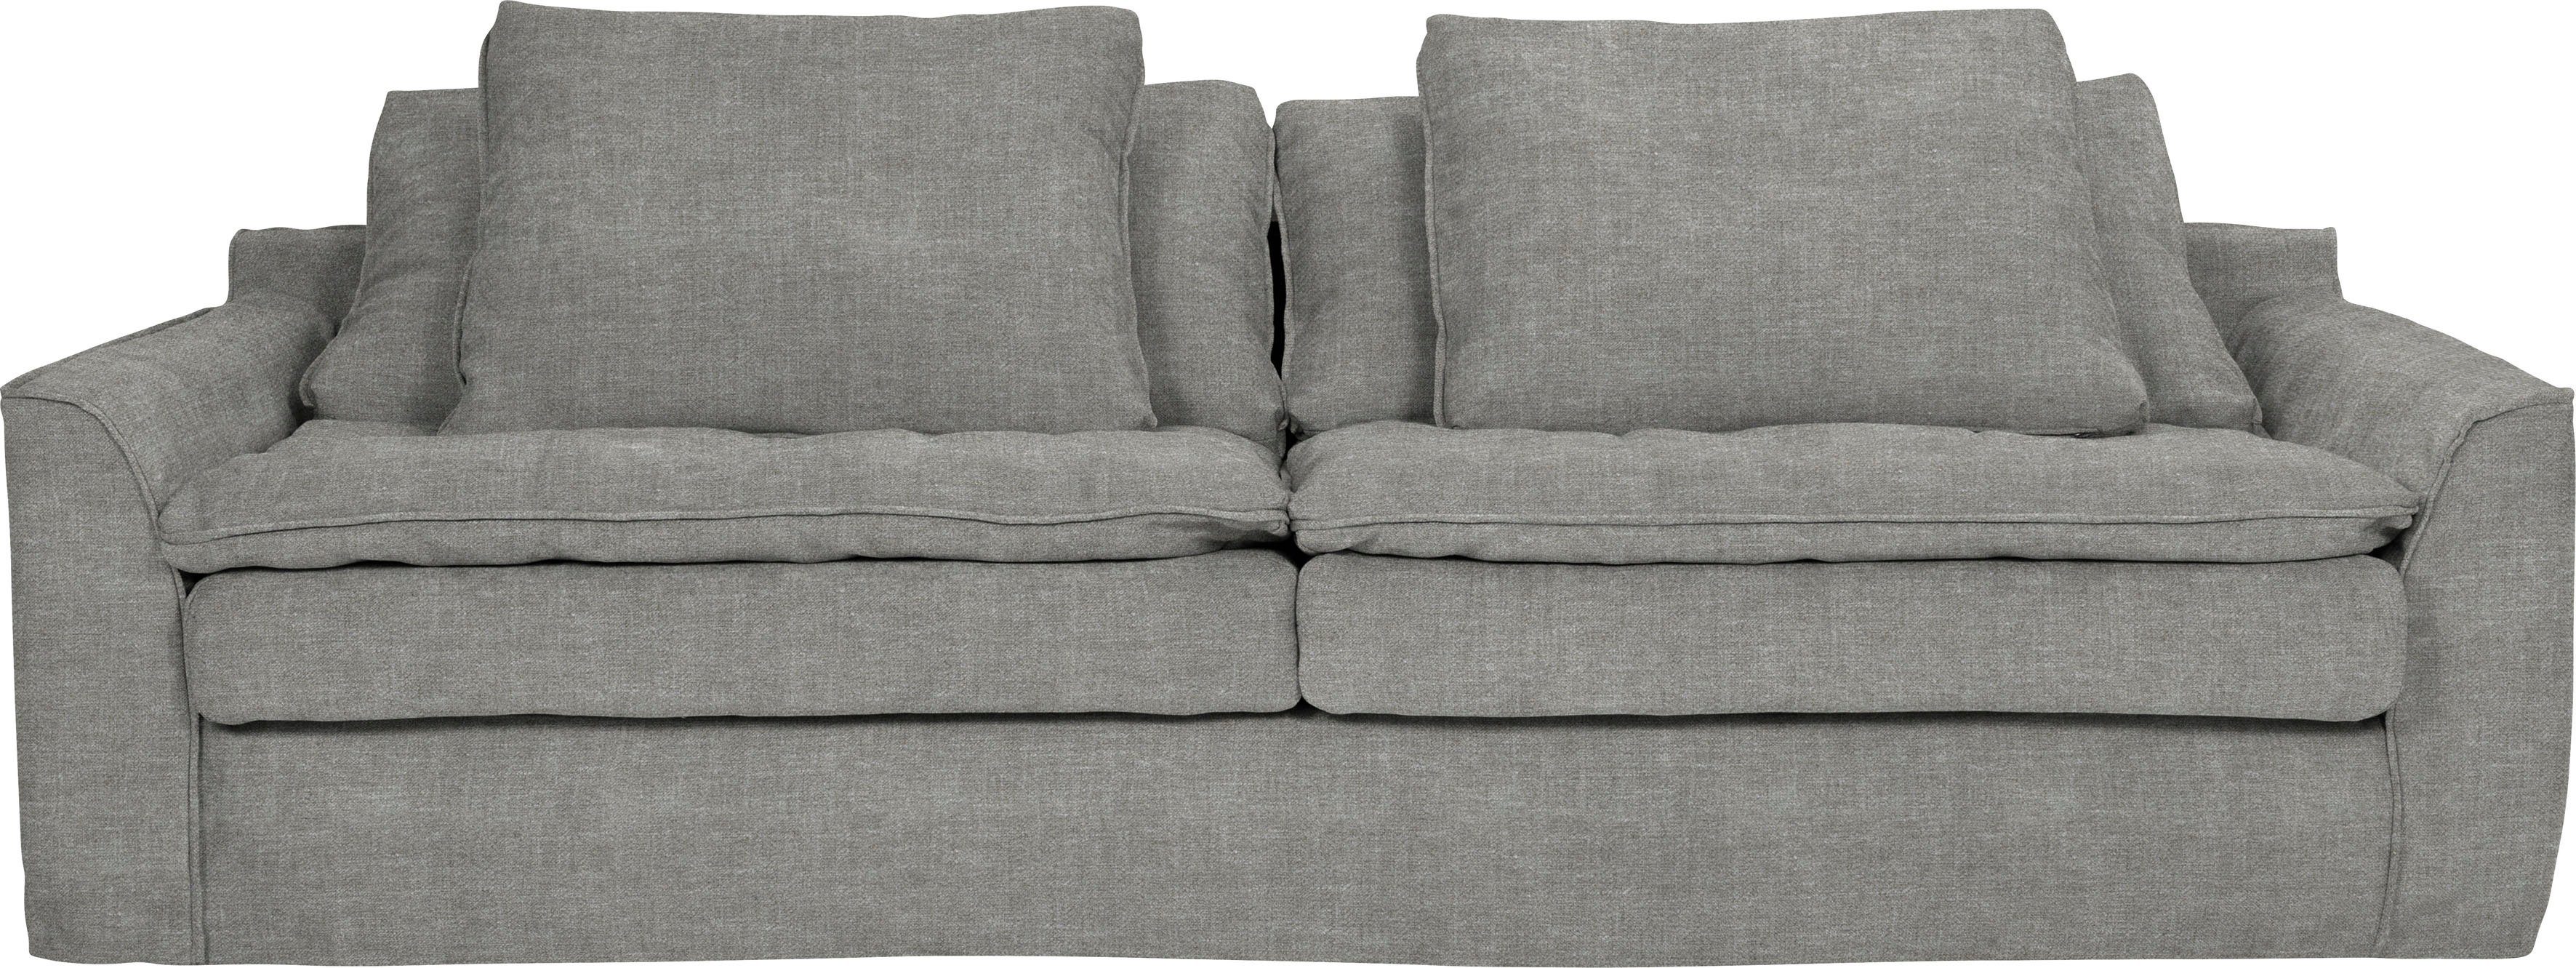 Big-Sofa Kissen, abnehmbarer waschbarer Hussenbezug furninova 4 Sake, inklusive und